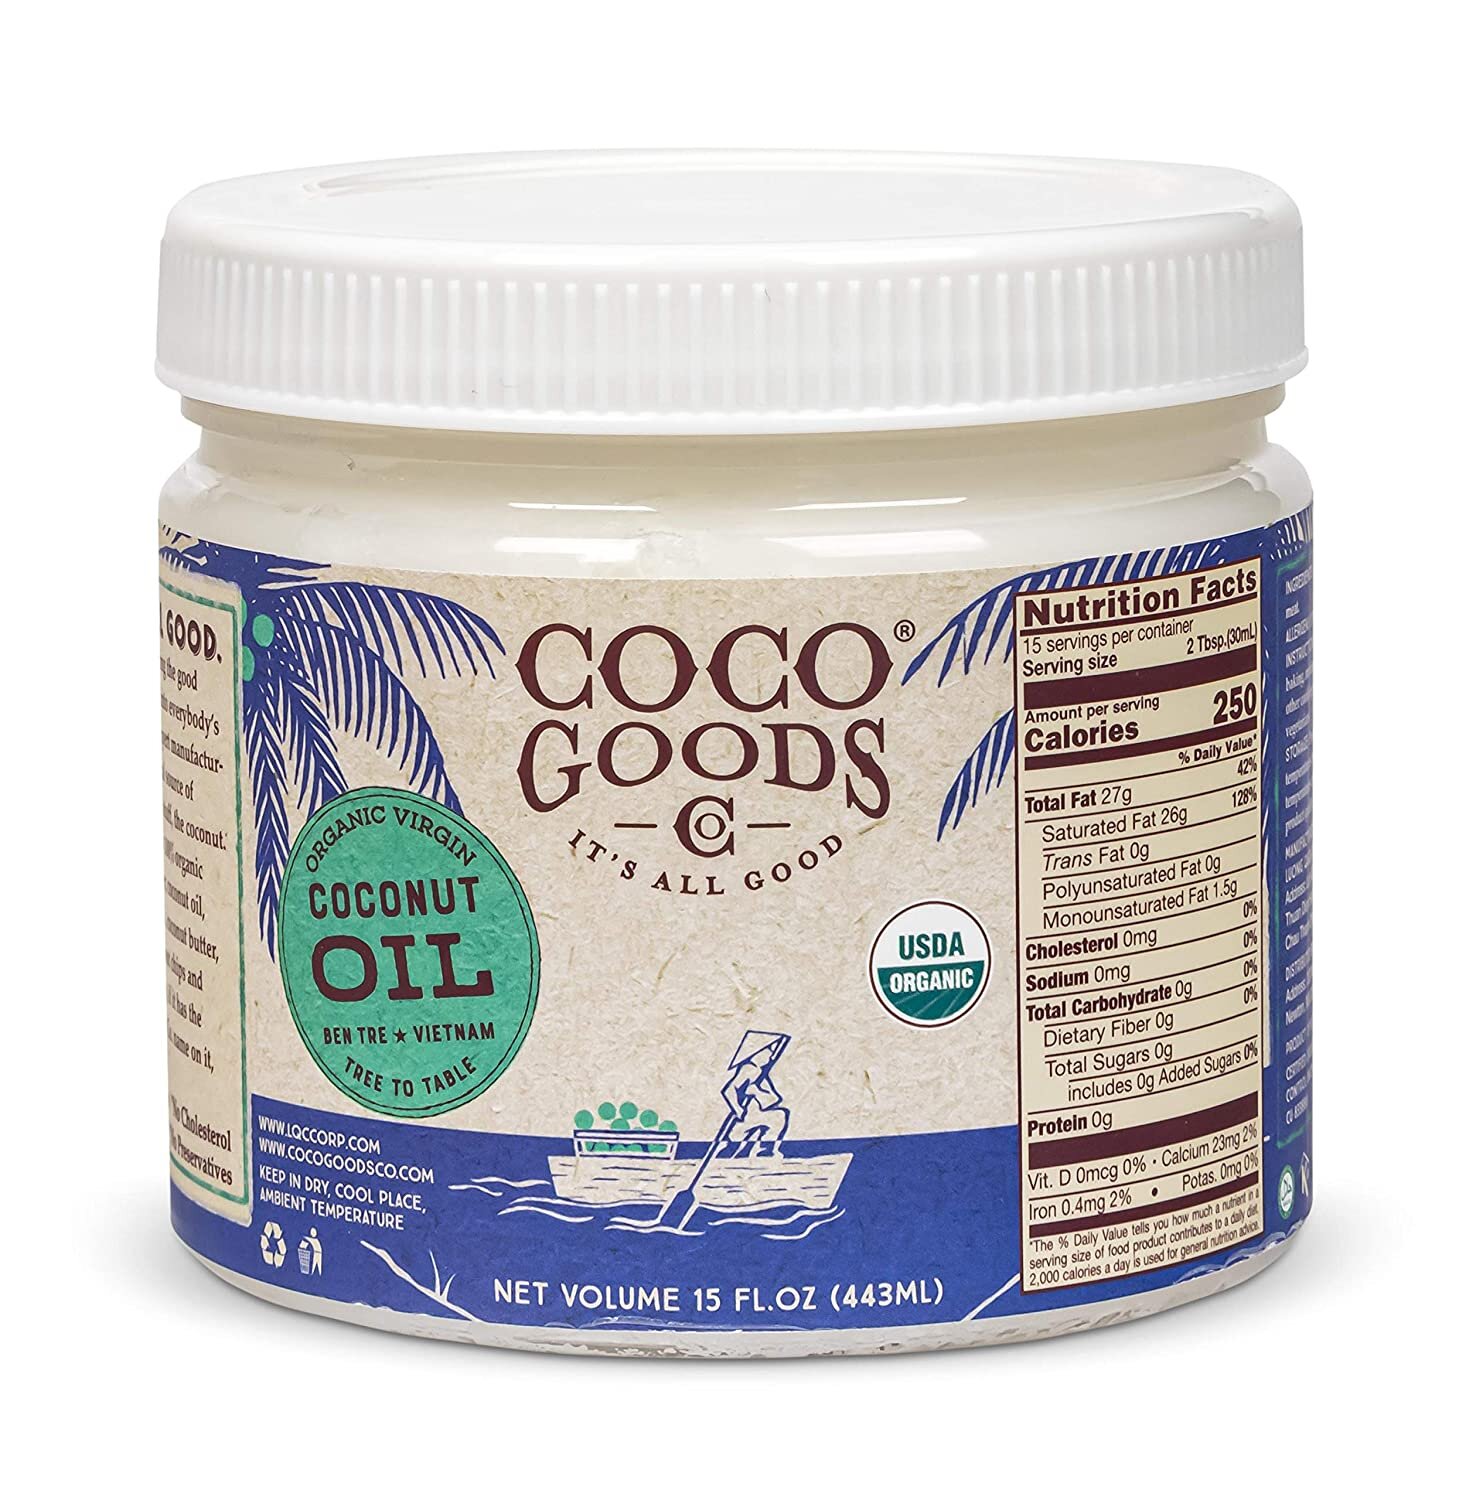 Coco Goods coconut oil (Copy)